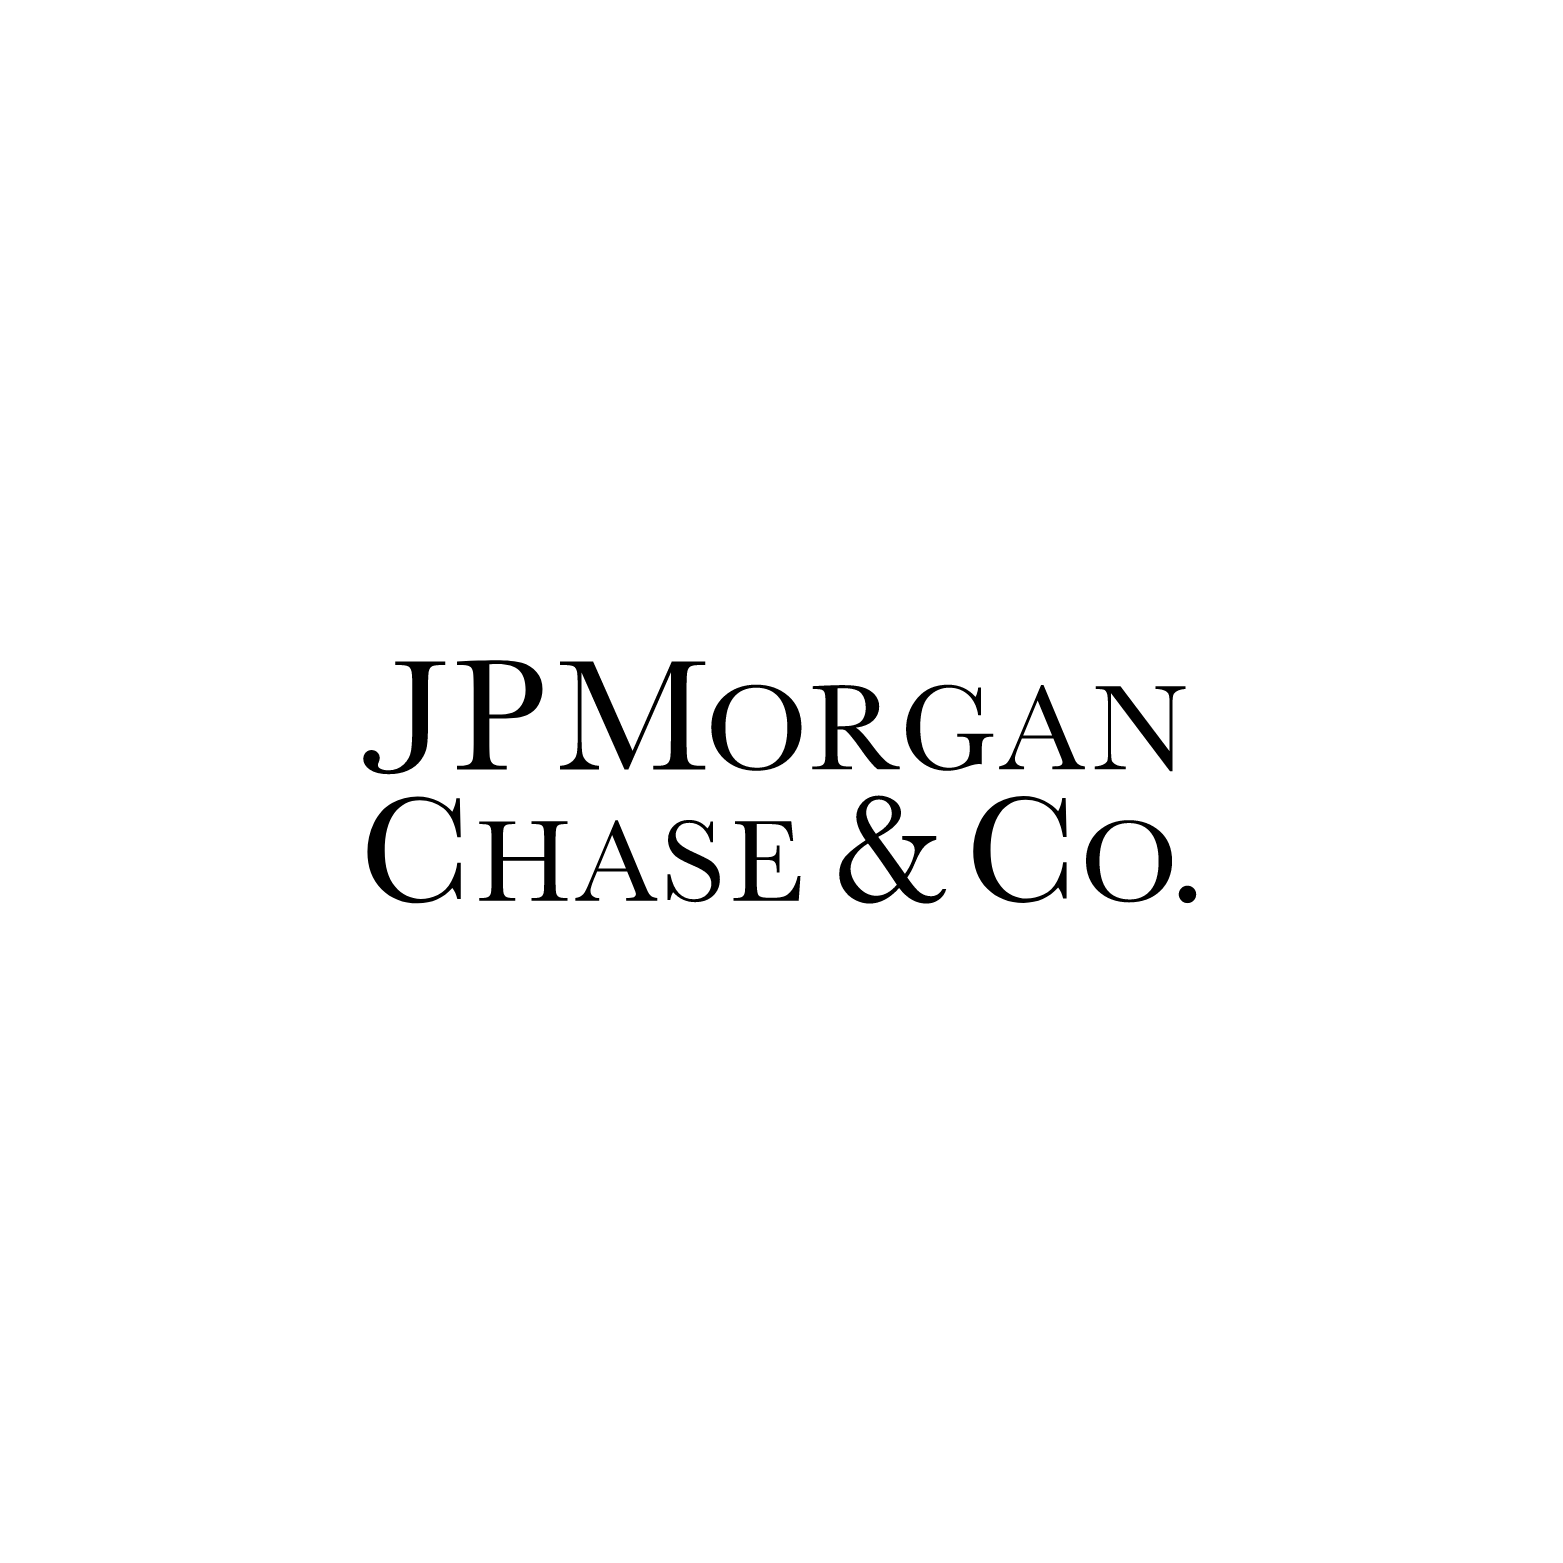 jp morgan chase & co jobs